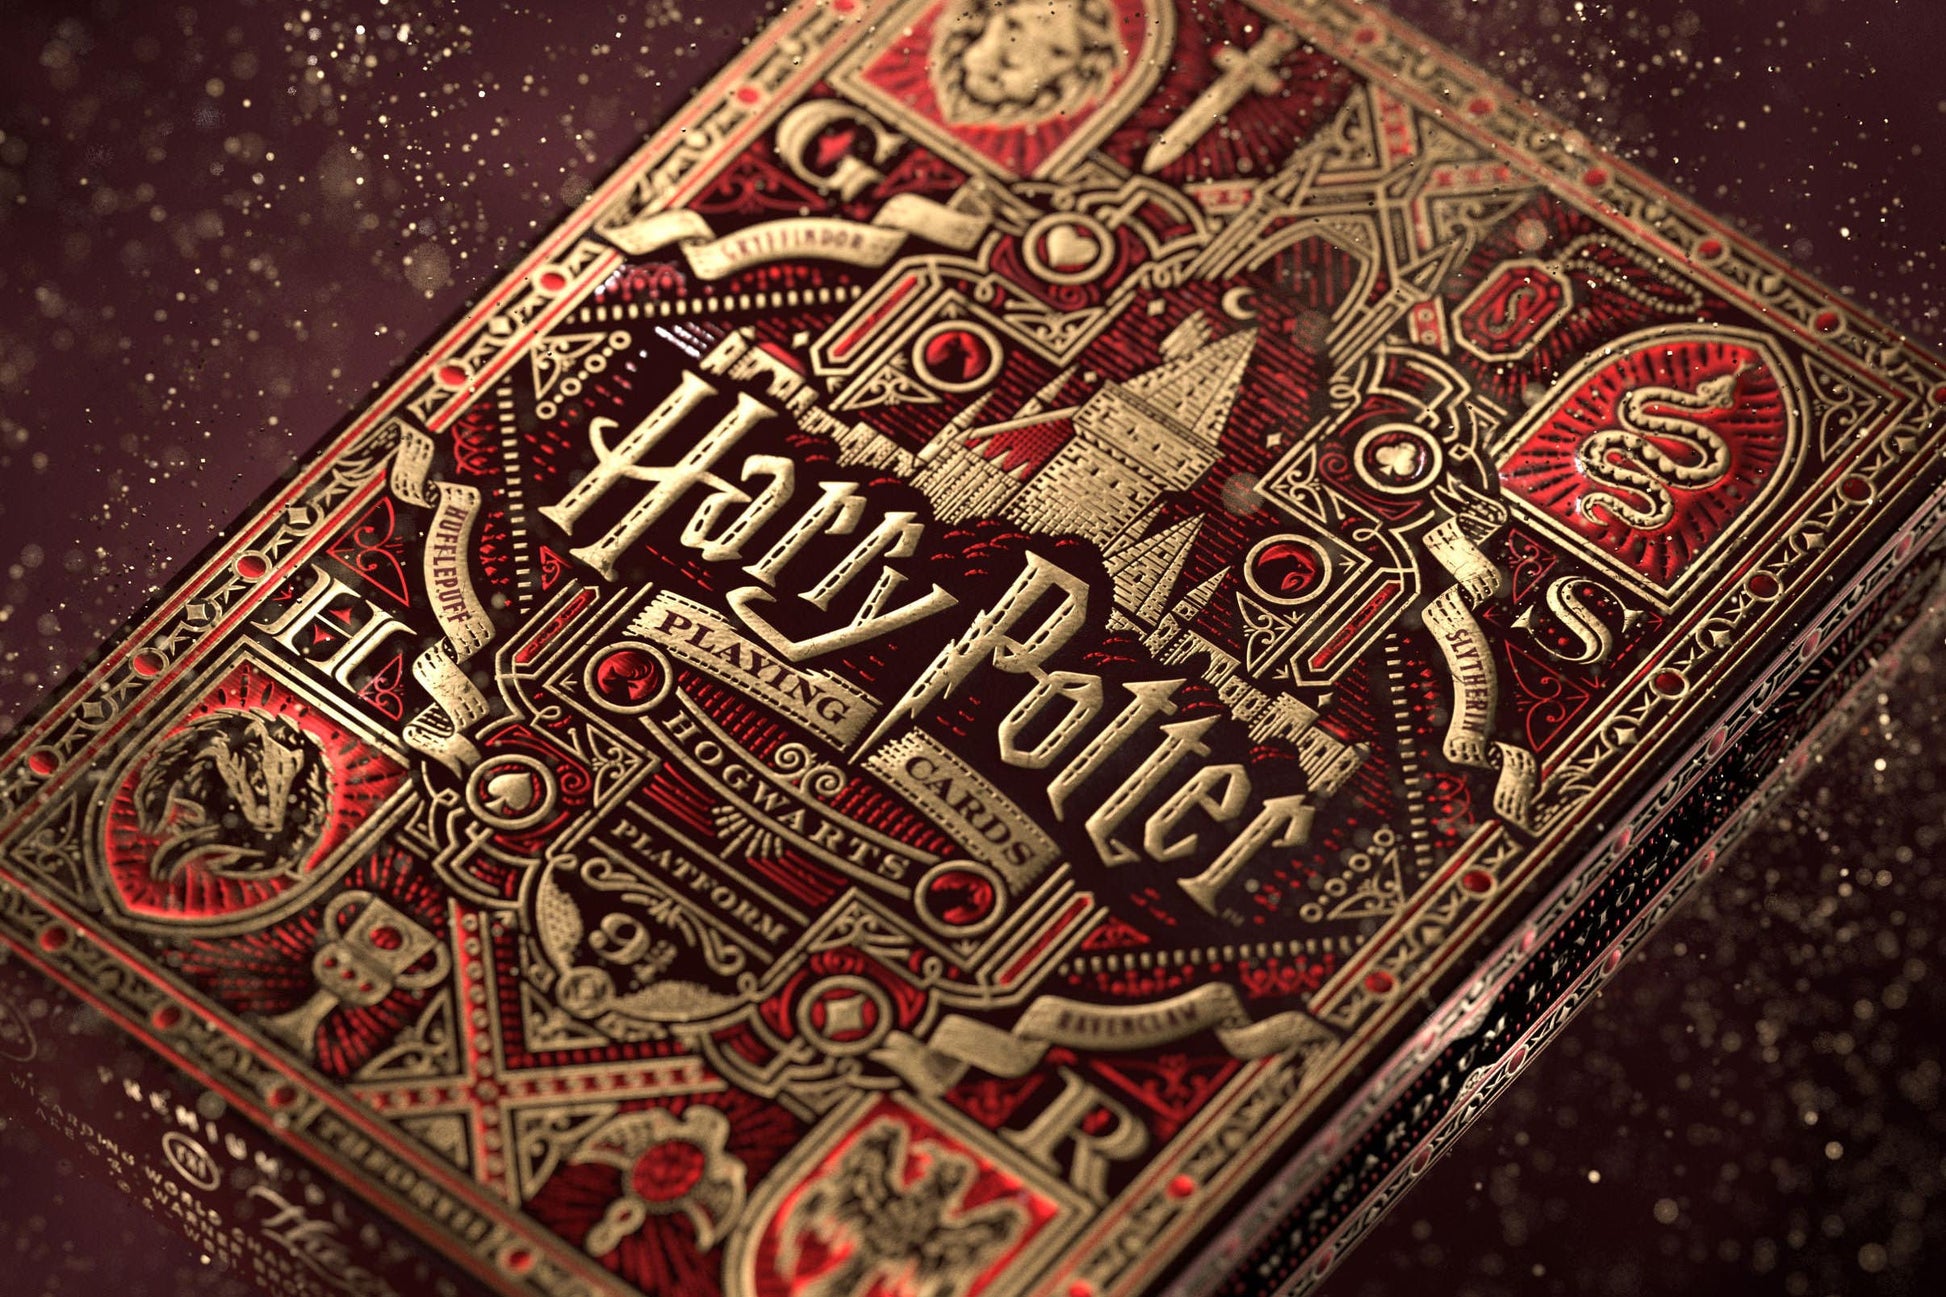 Playing Cards - Harry Potter Yellow | Flywheel | Stationery | Tasmania